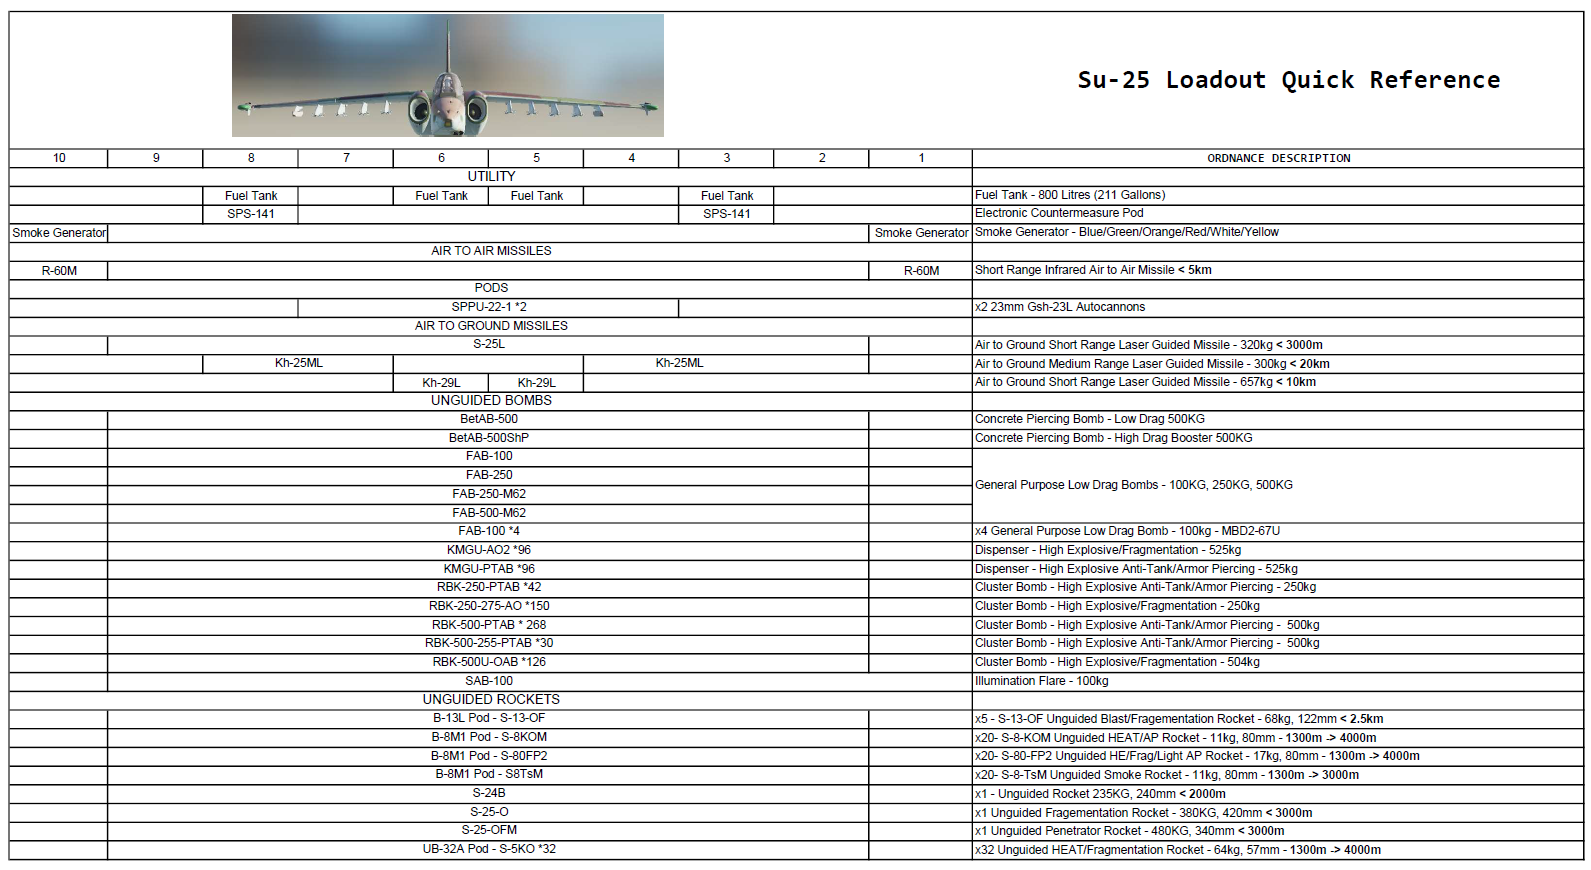 Su-25 Loadout Quick Reference PDF